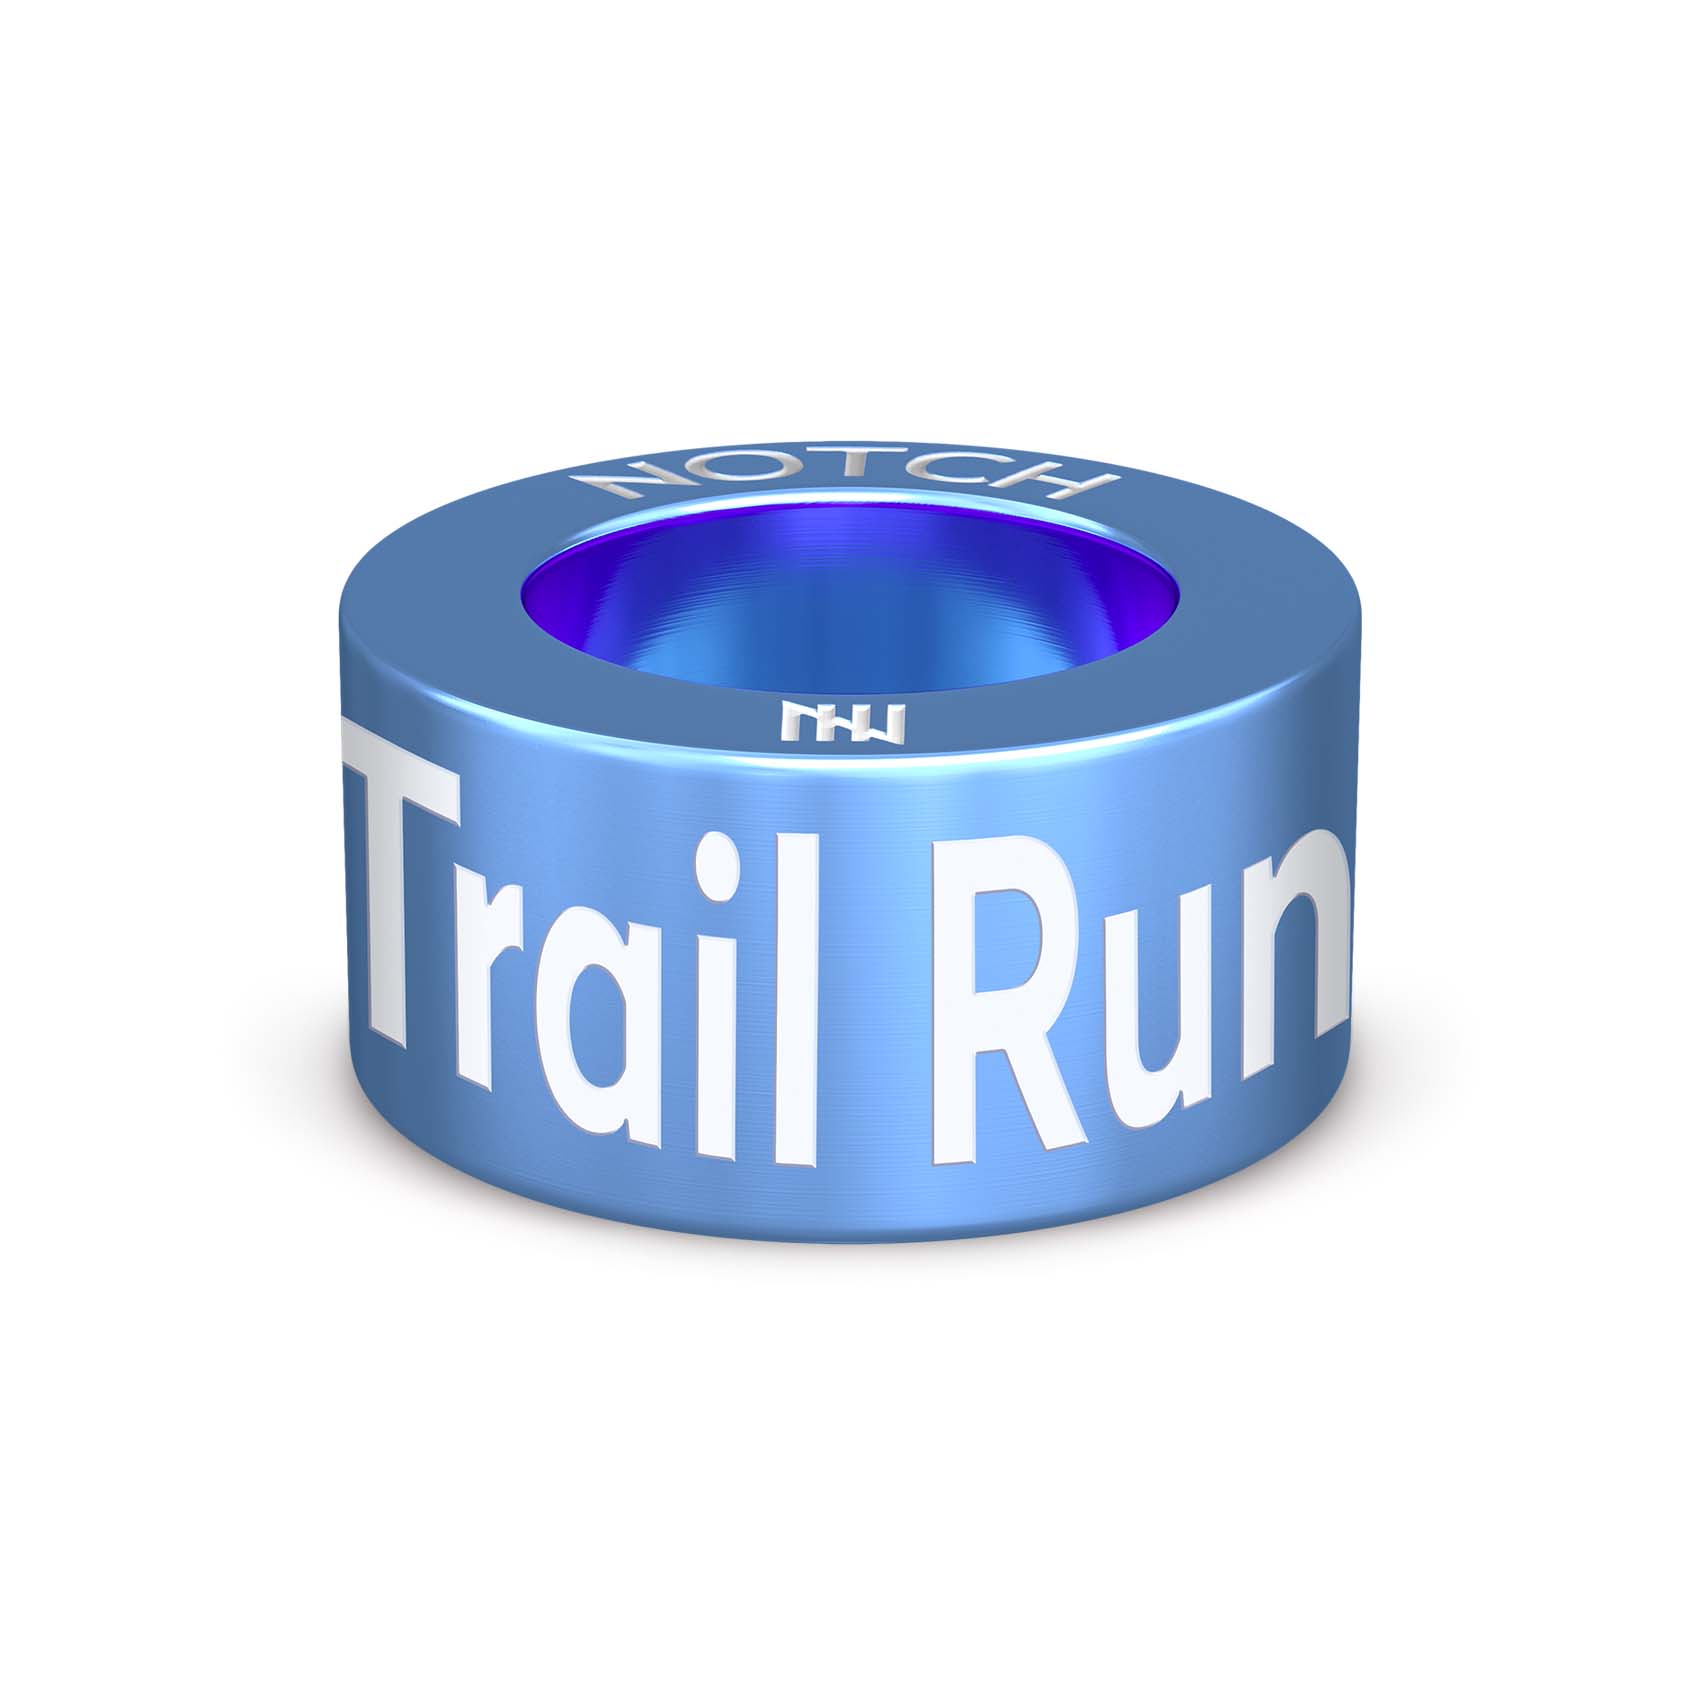 Every Trail Run NOTCH Charm (Full List)